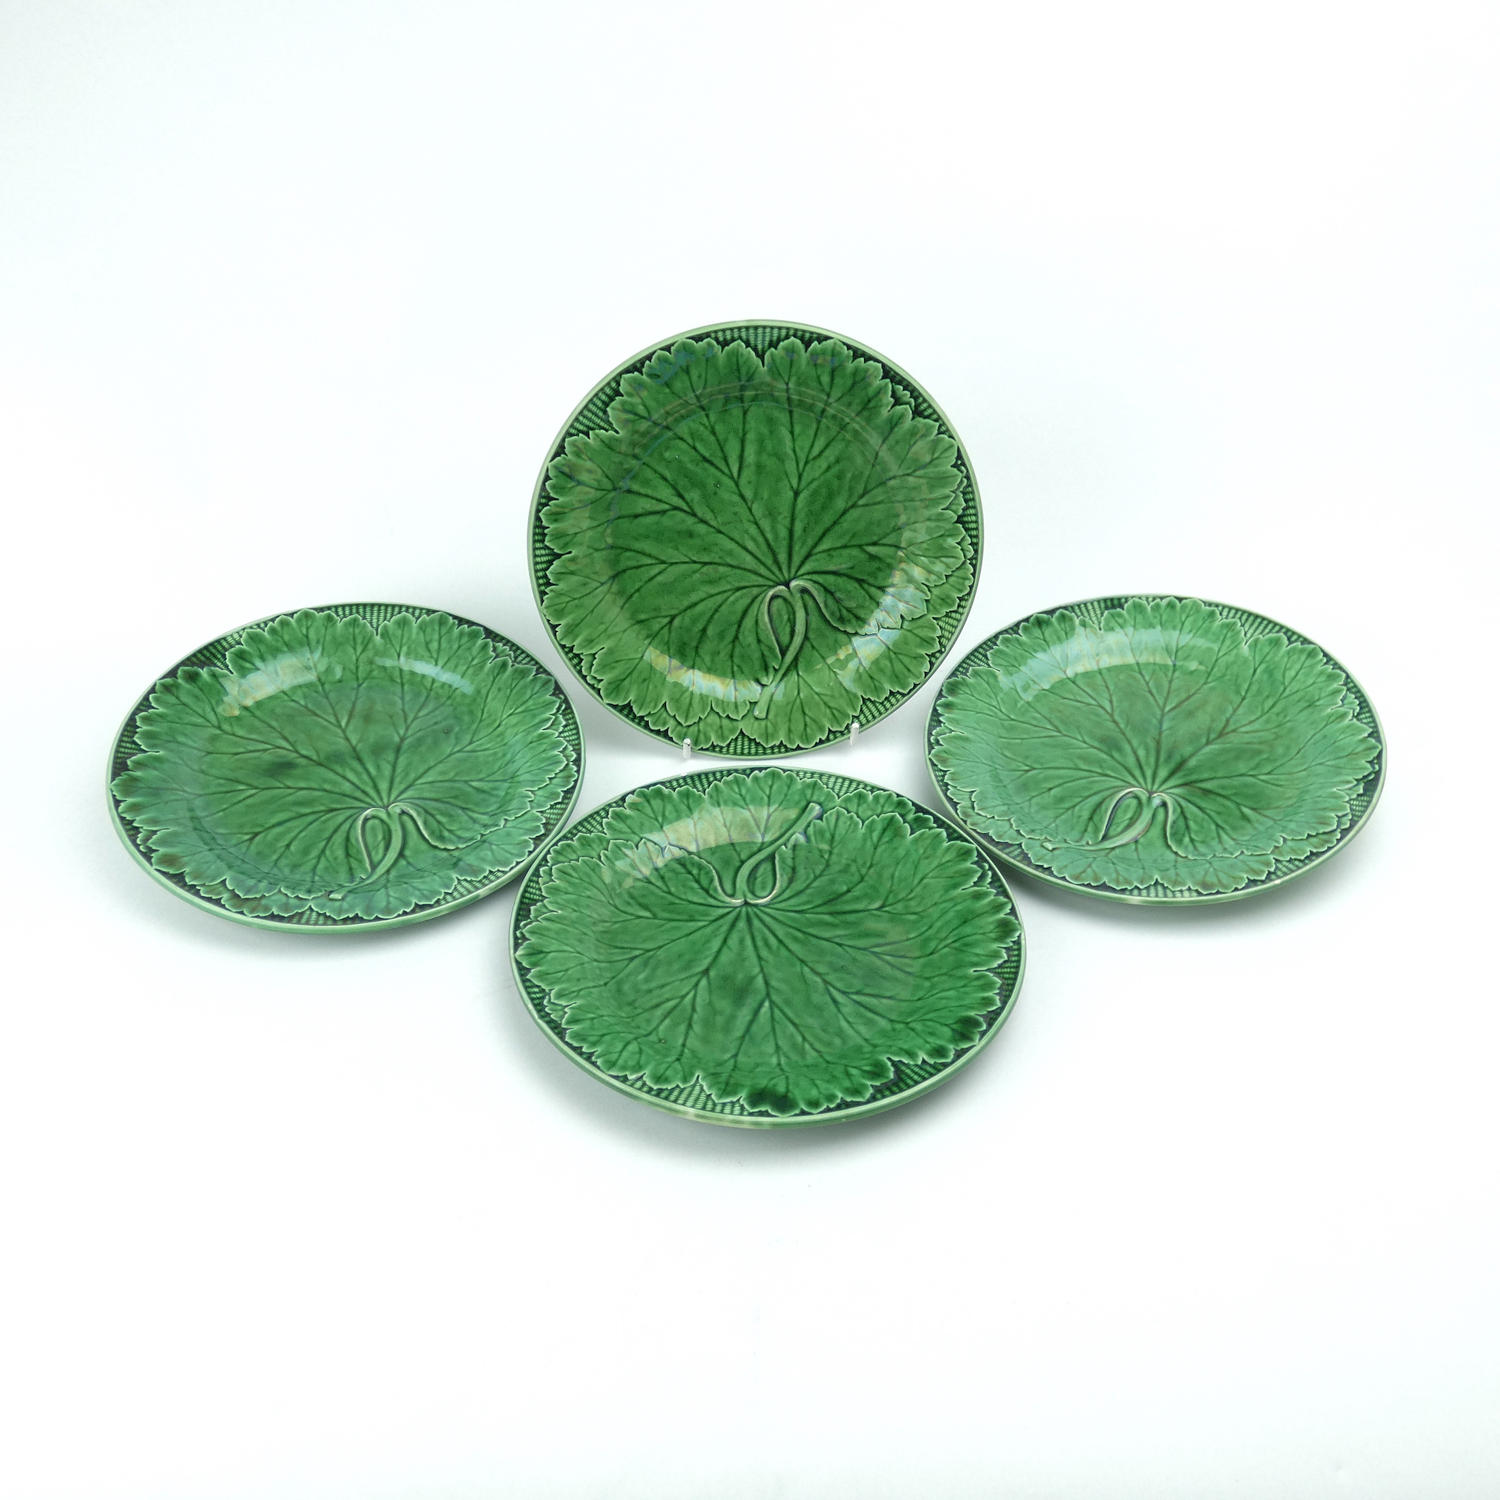 Cabbage Leaf Plates.